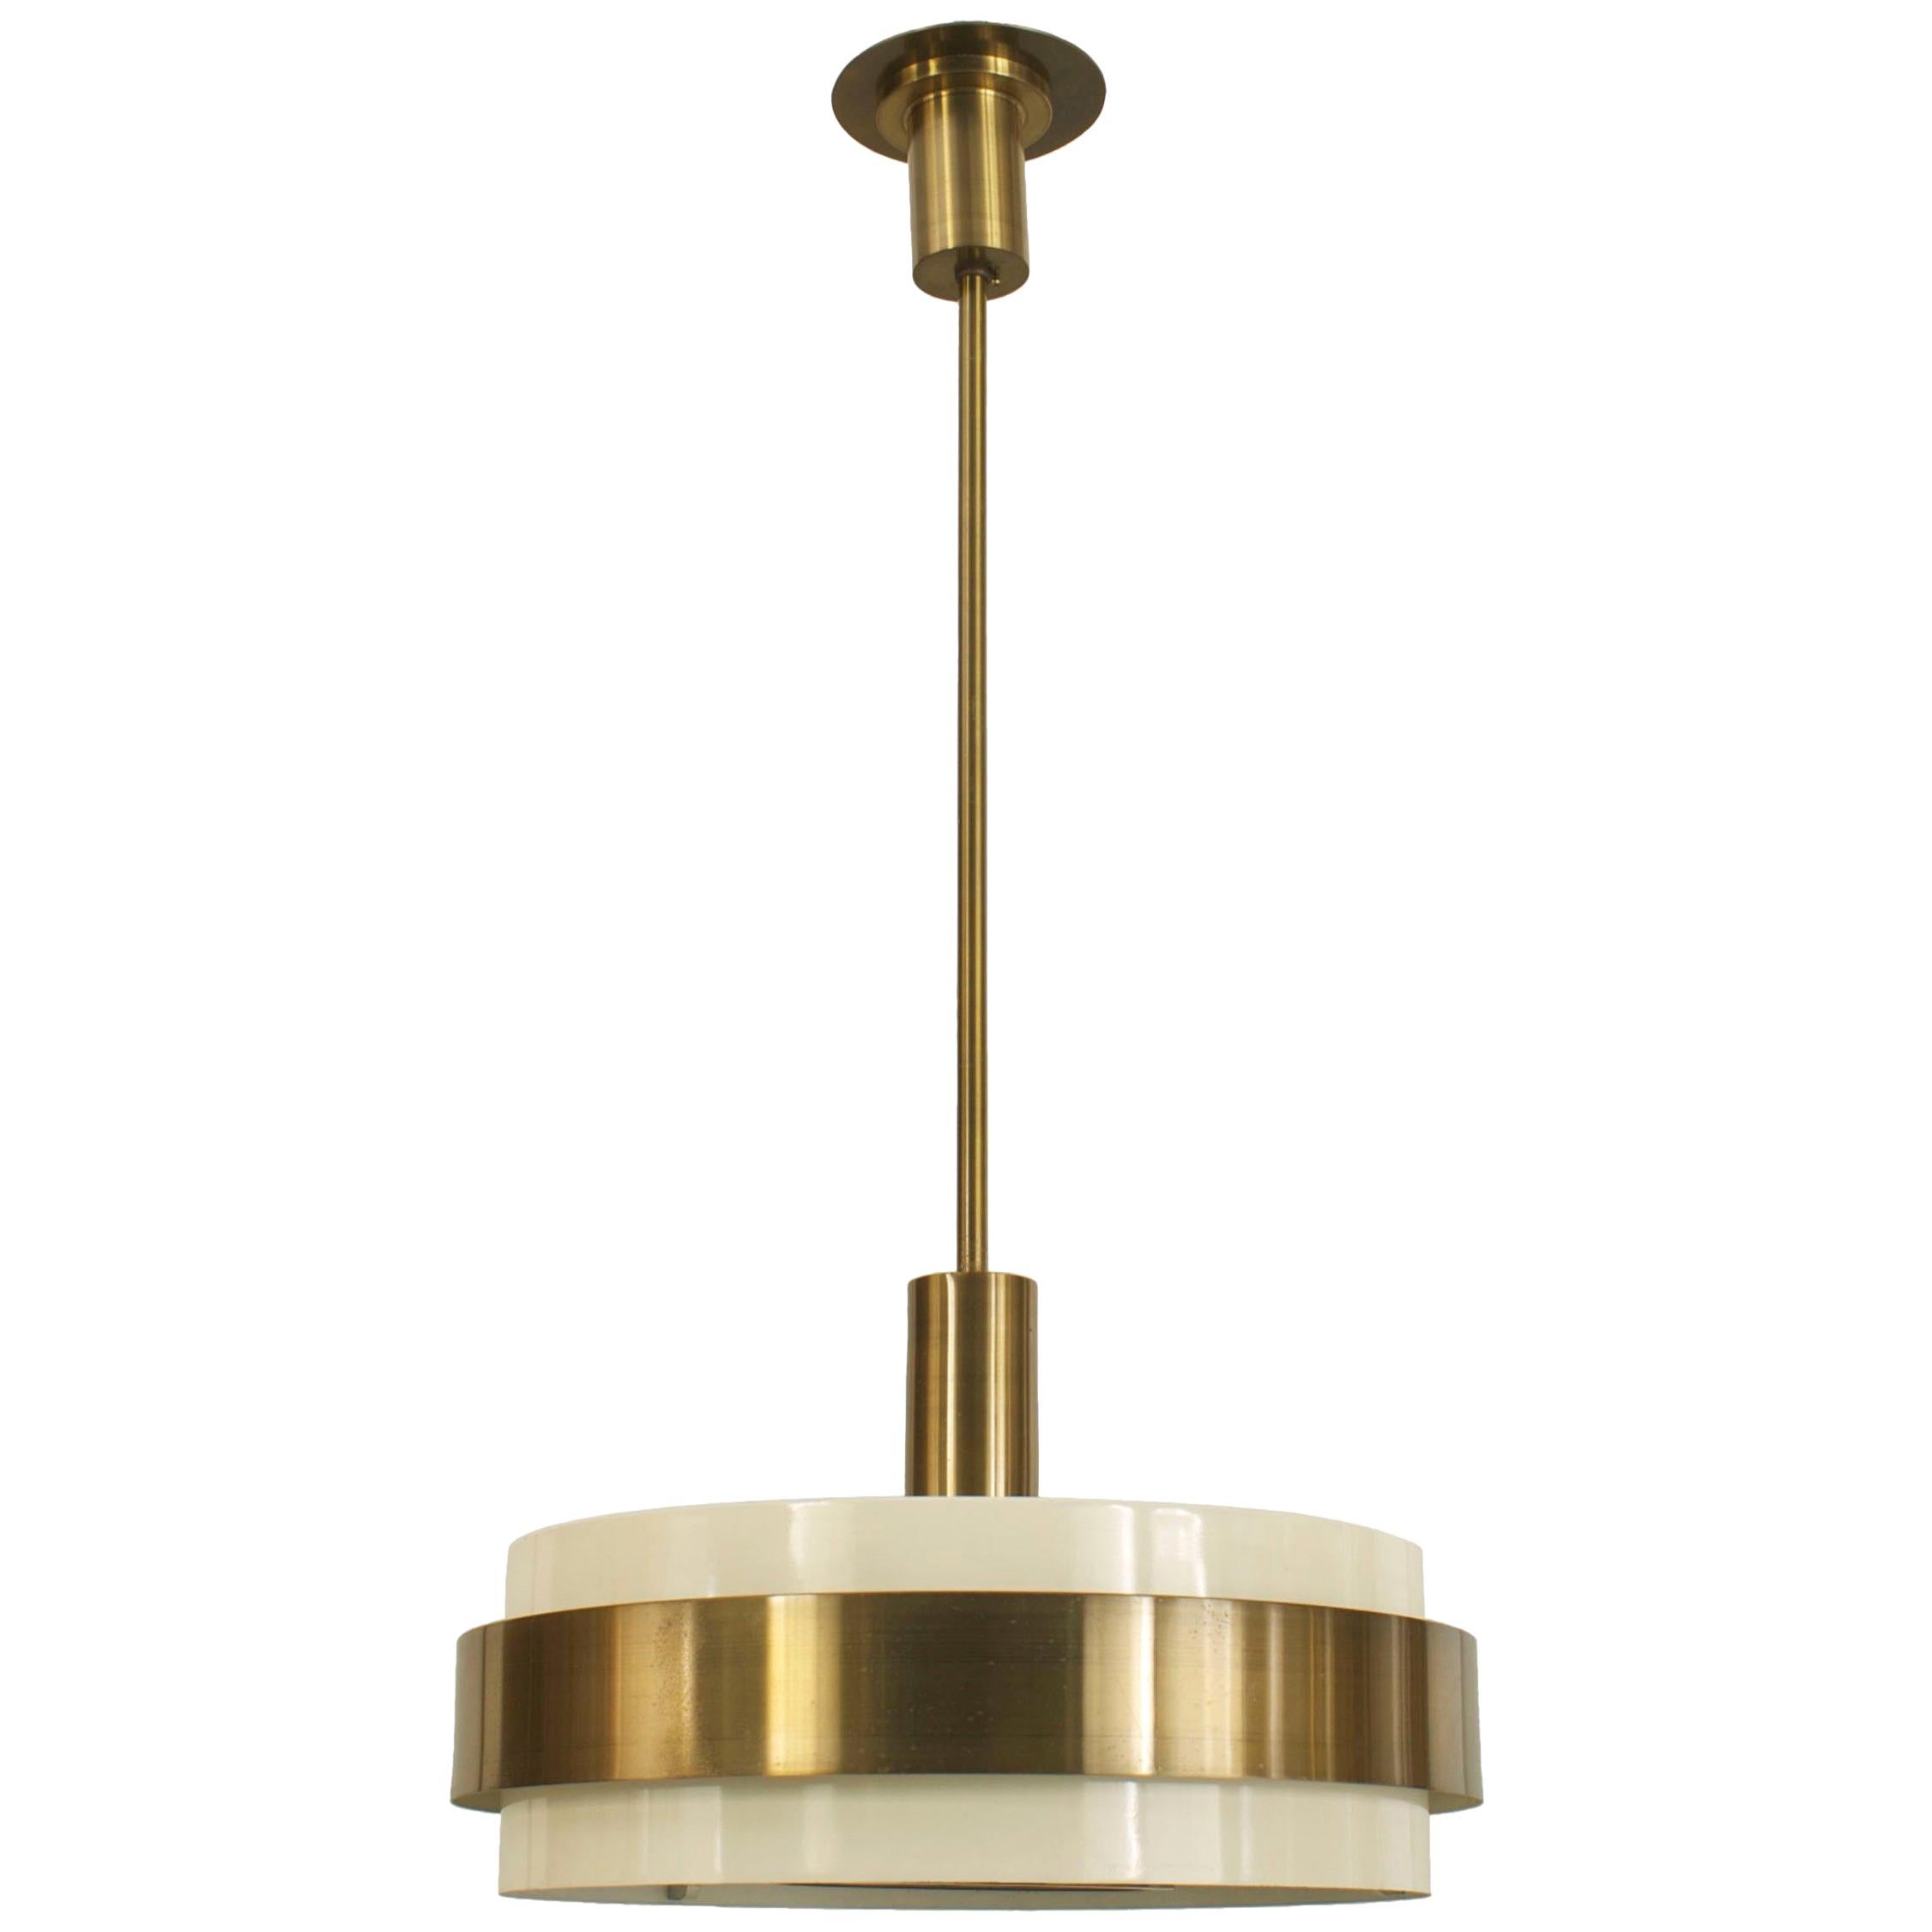 French Art Deco Perzel Beige Metal and Brass Lantern For Sale